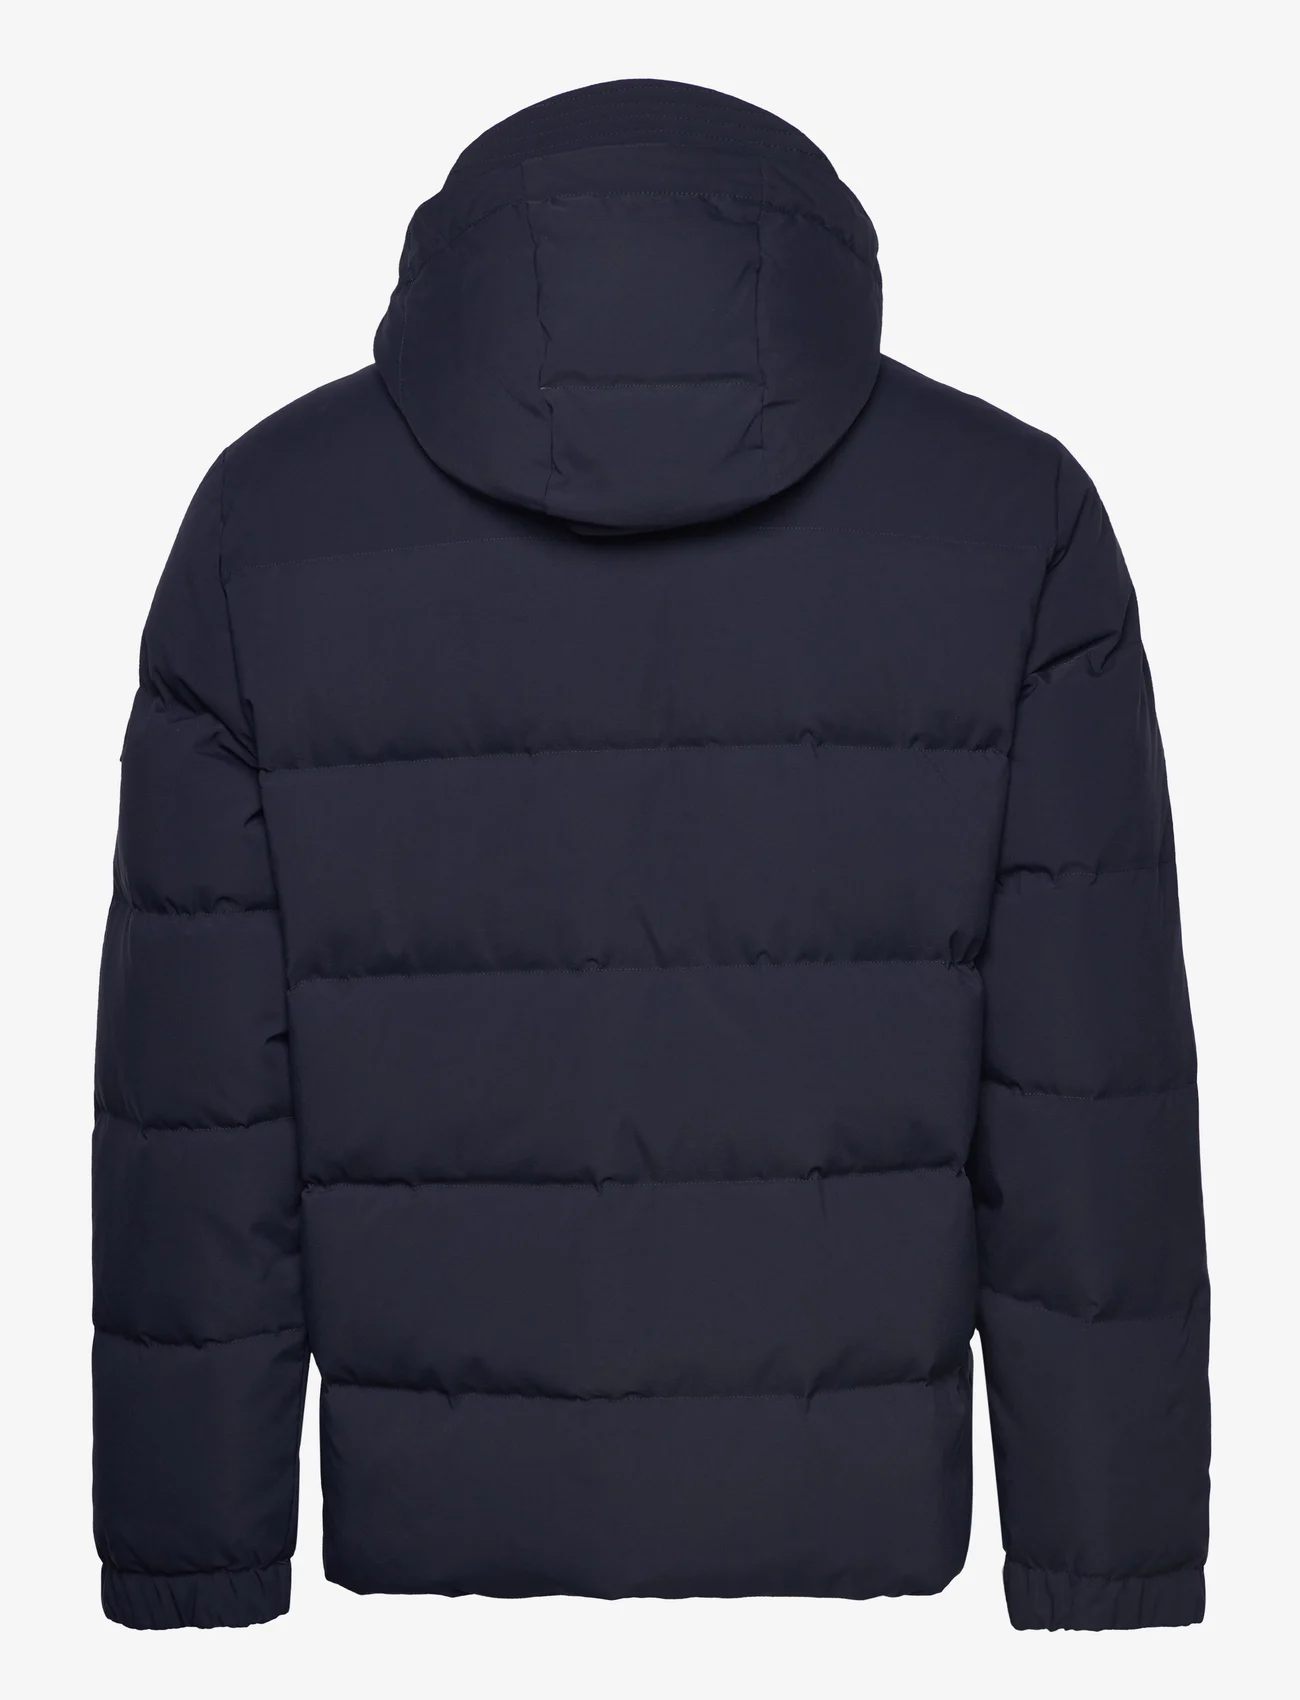 Lexington Clothing - Ben Down Puffer Jacket - winterjacken - dark blue - 1